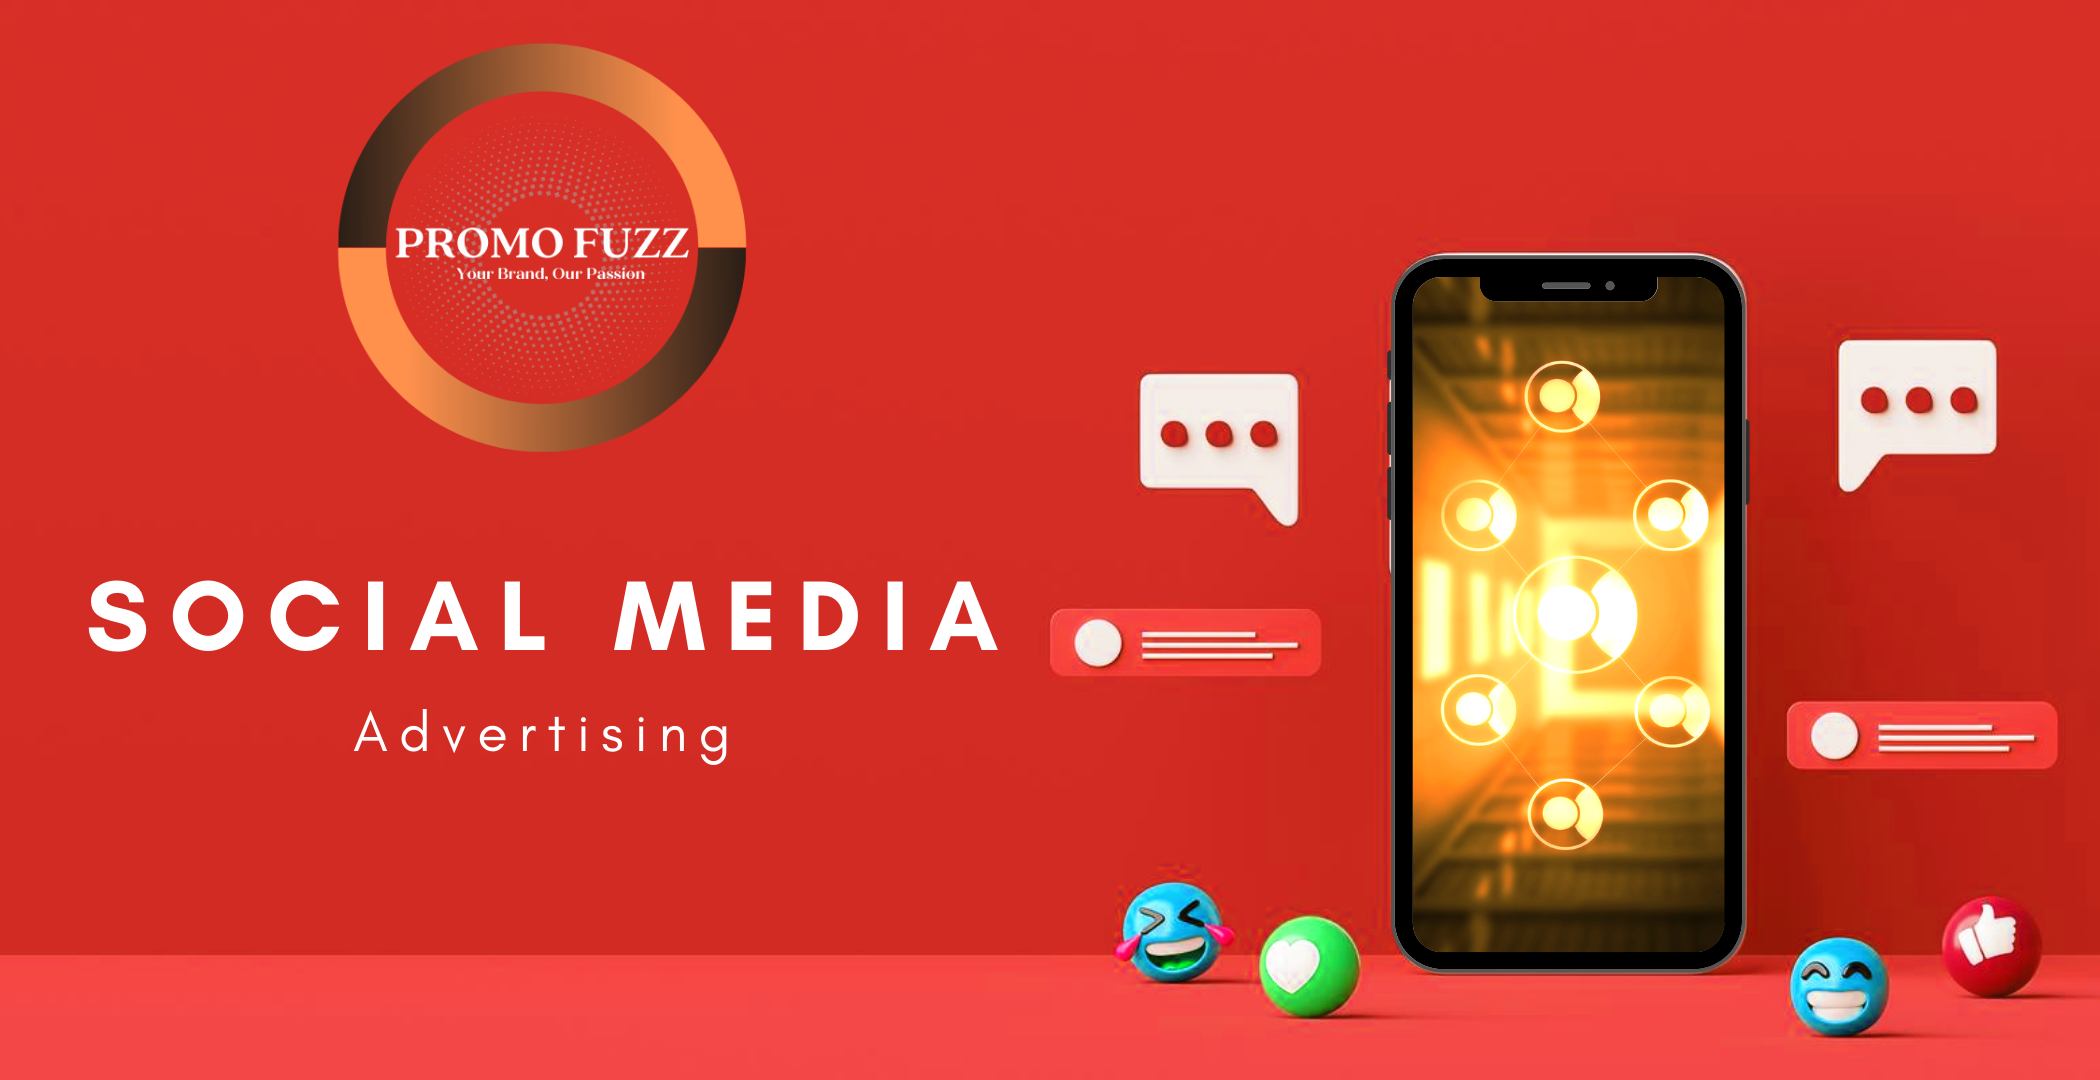 Social Media Advertising with Promo Fuzz